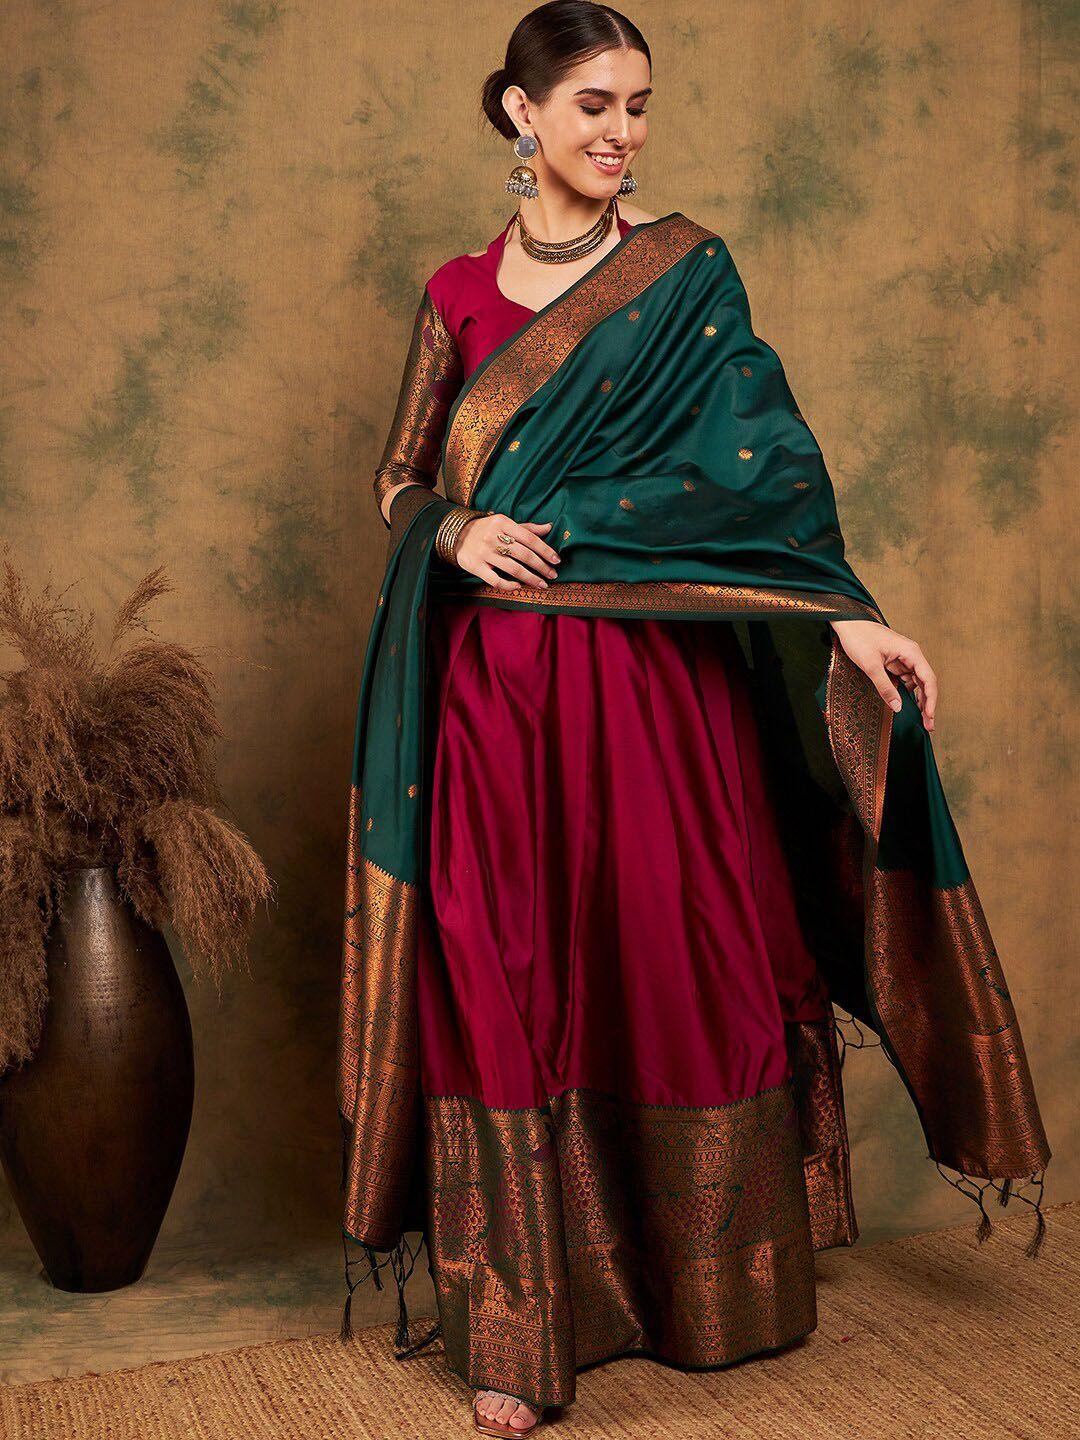 sangria woven-designed semi-stitched lehenga & unstitched blouse with dupatta